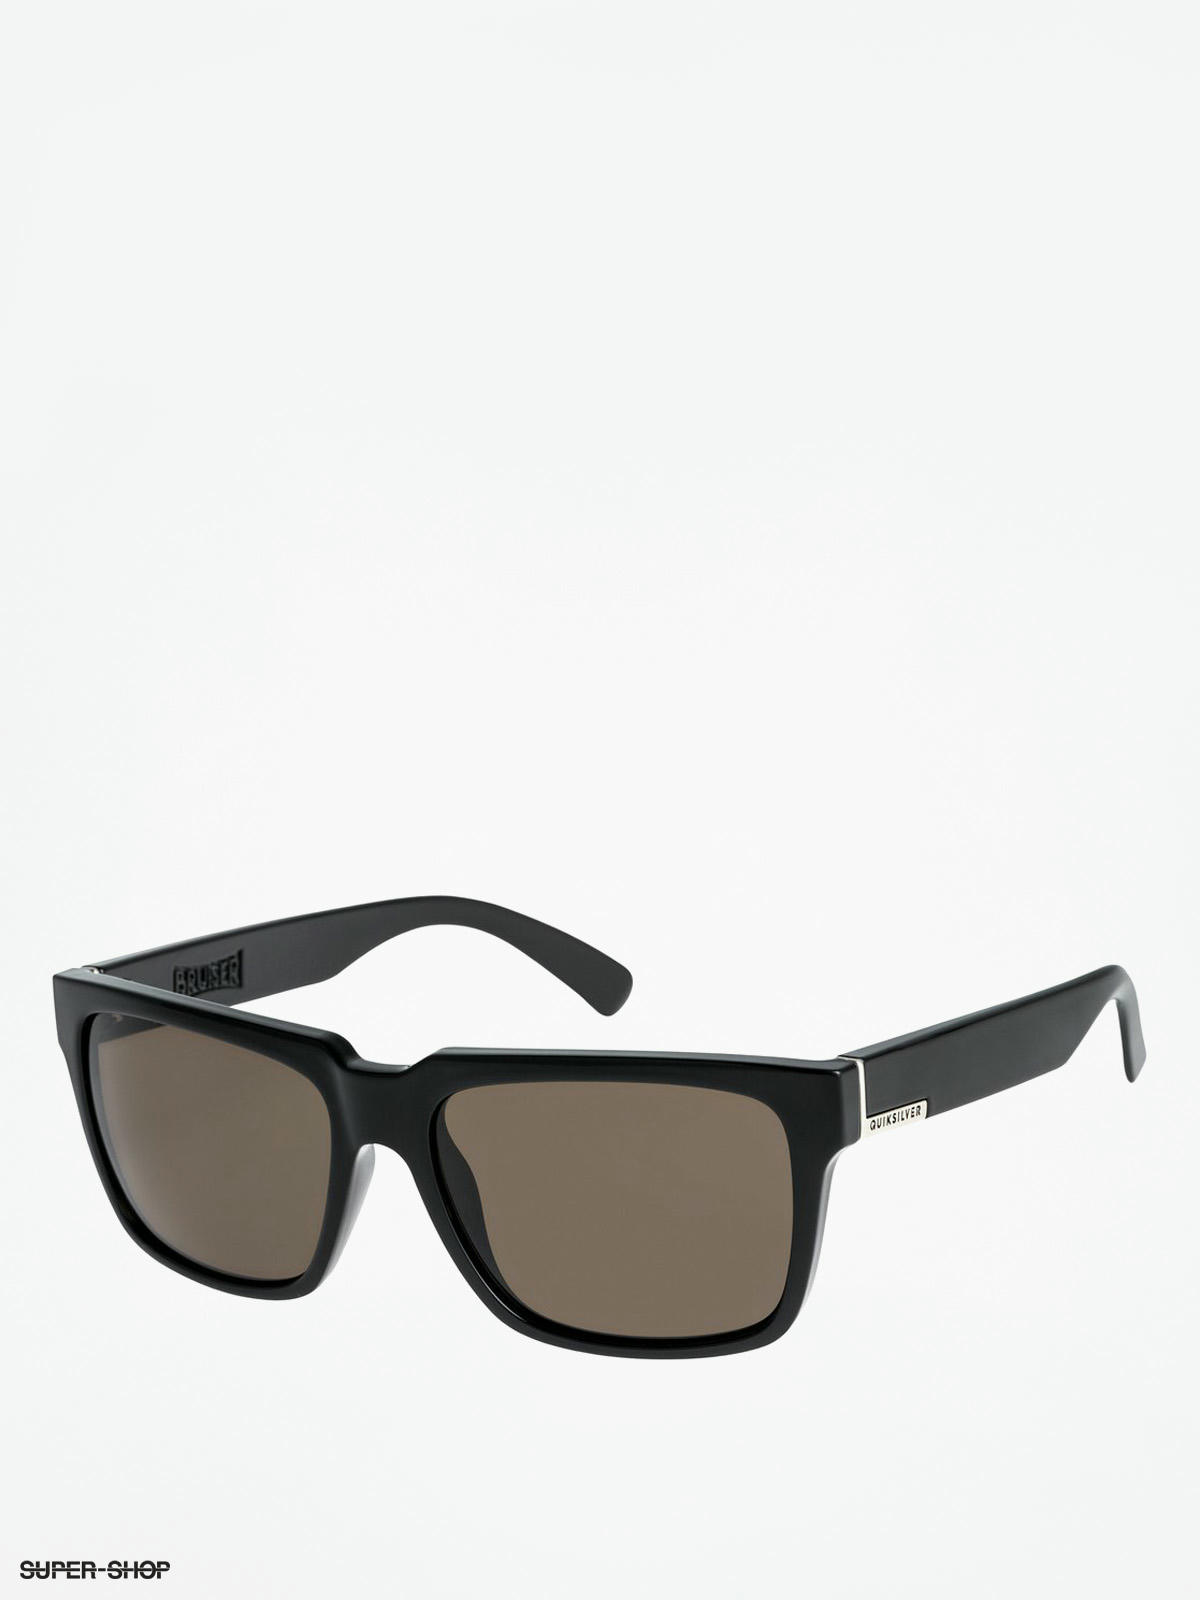 https://static.super-shop.com/930281-quiksilver-sunglasses-bruiser-shiny-black-grey.jpg?w=1920